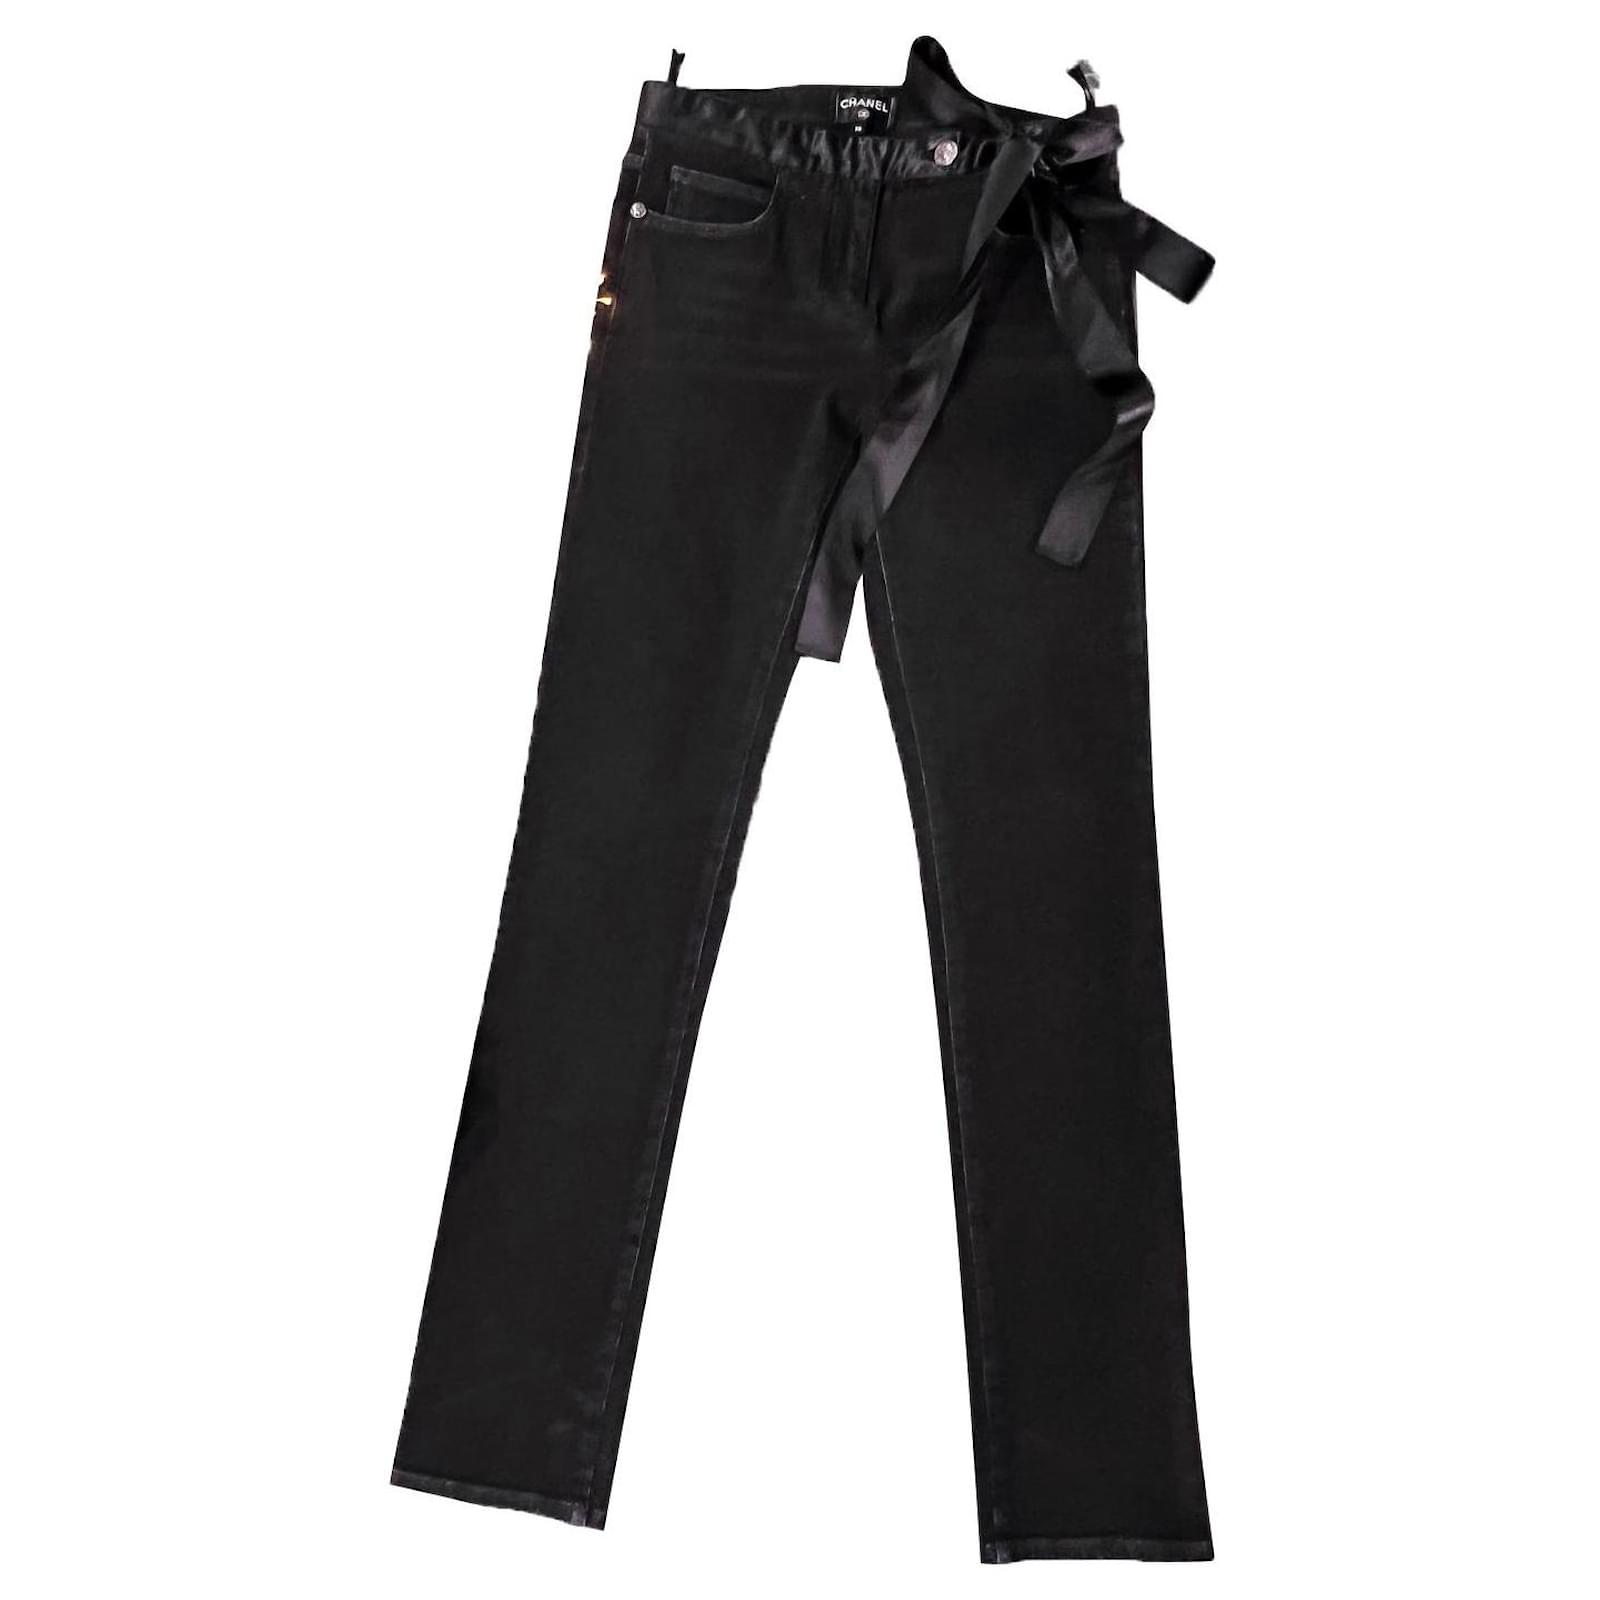 50 Cm Trimmings Elastic Ribbon Skirt Belt Black Pants 6 Cm High